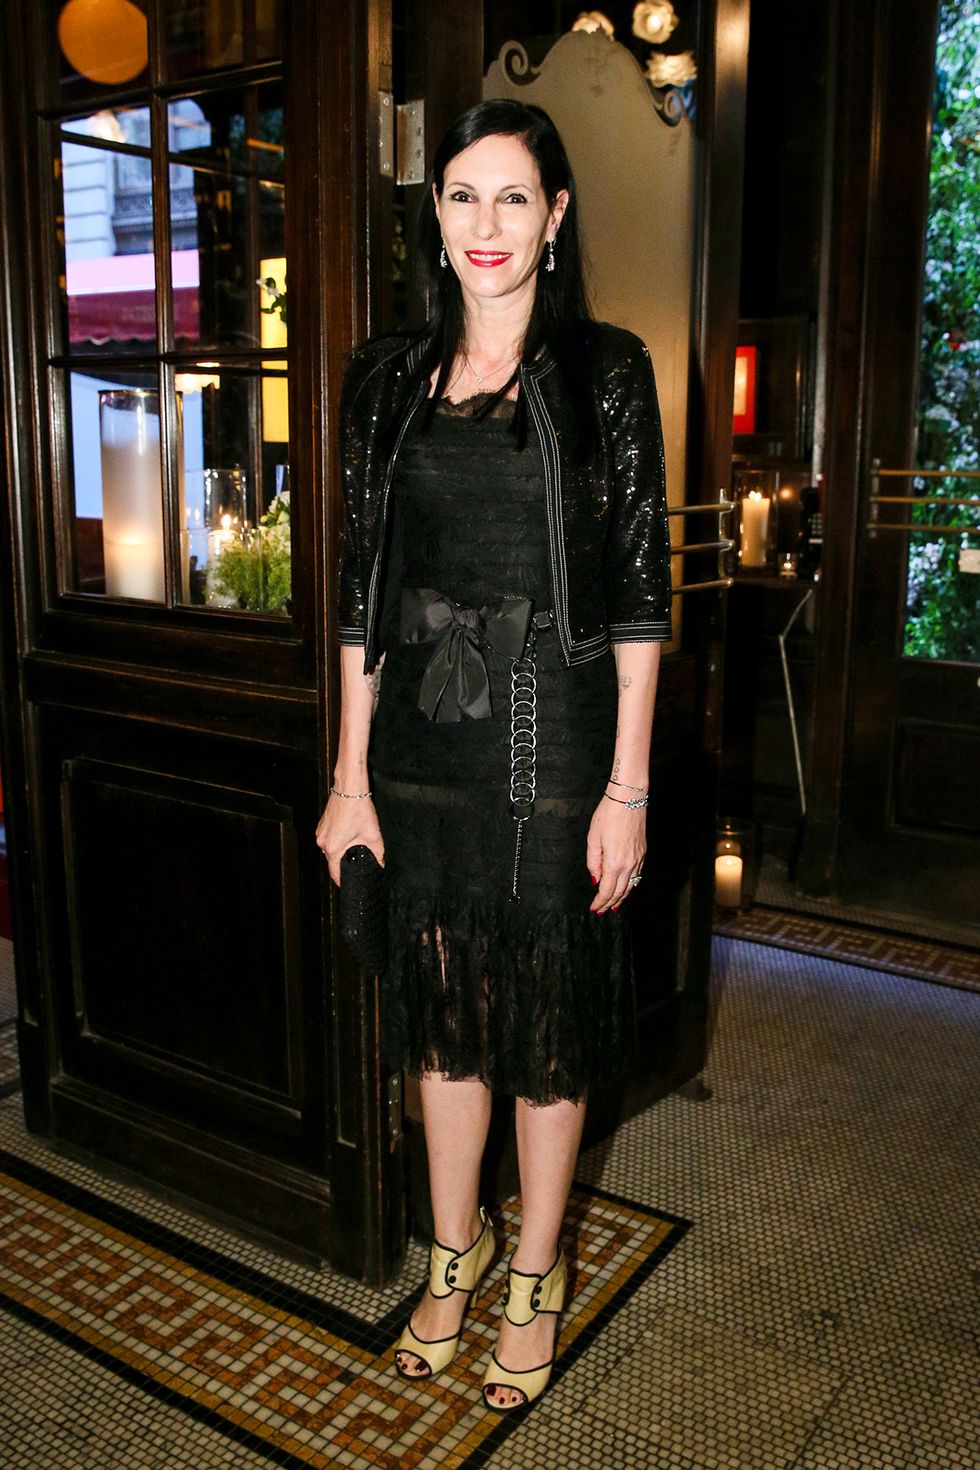 Chanel Tribeca Festival Artists Dinner - Celebrity Event New York City